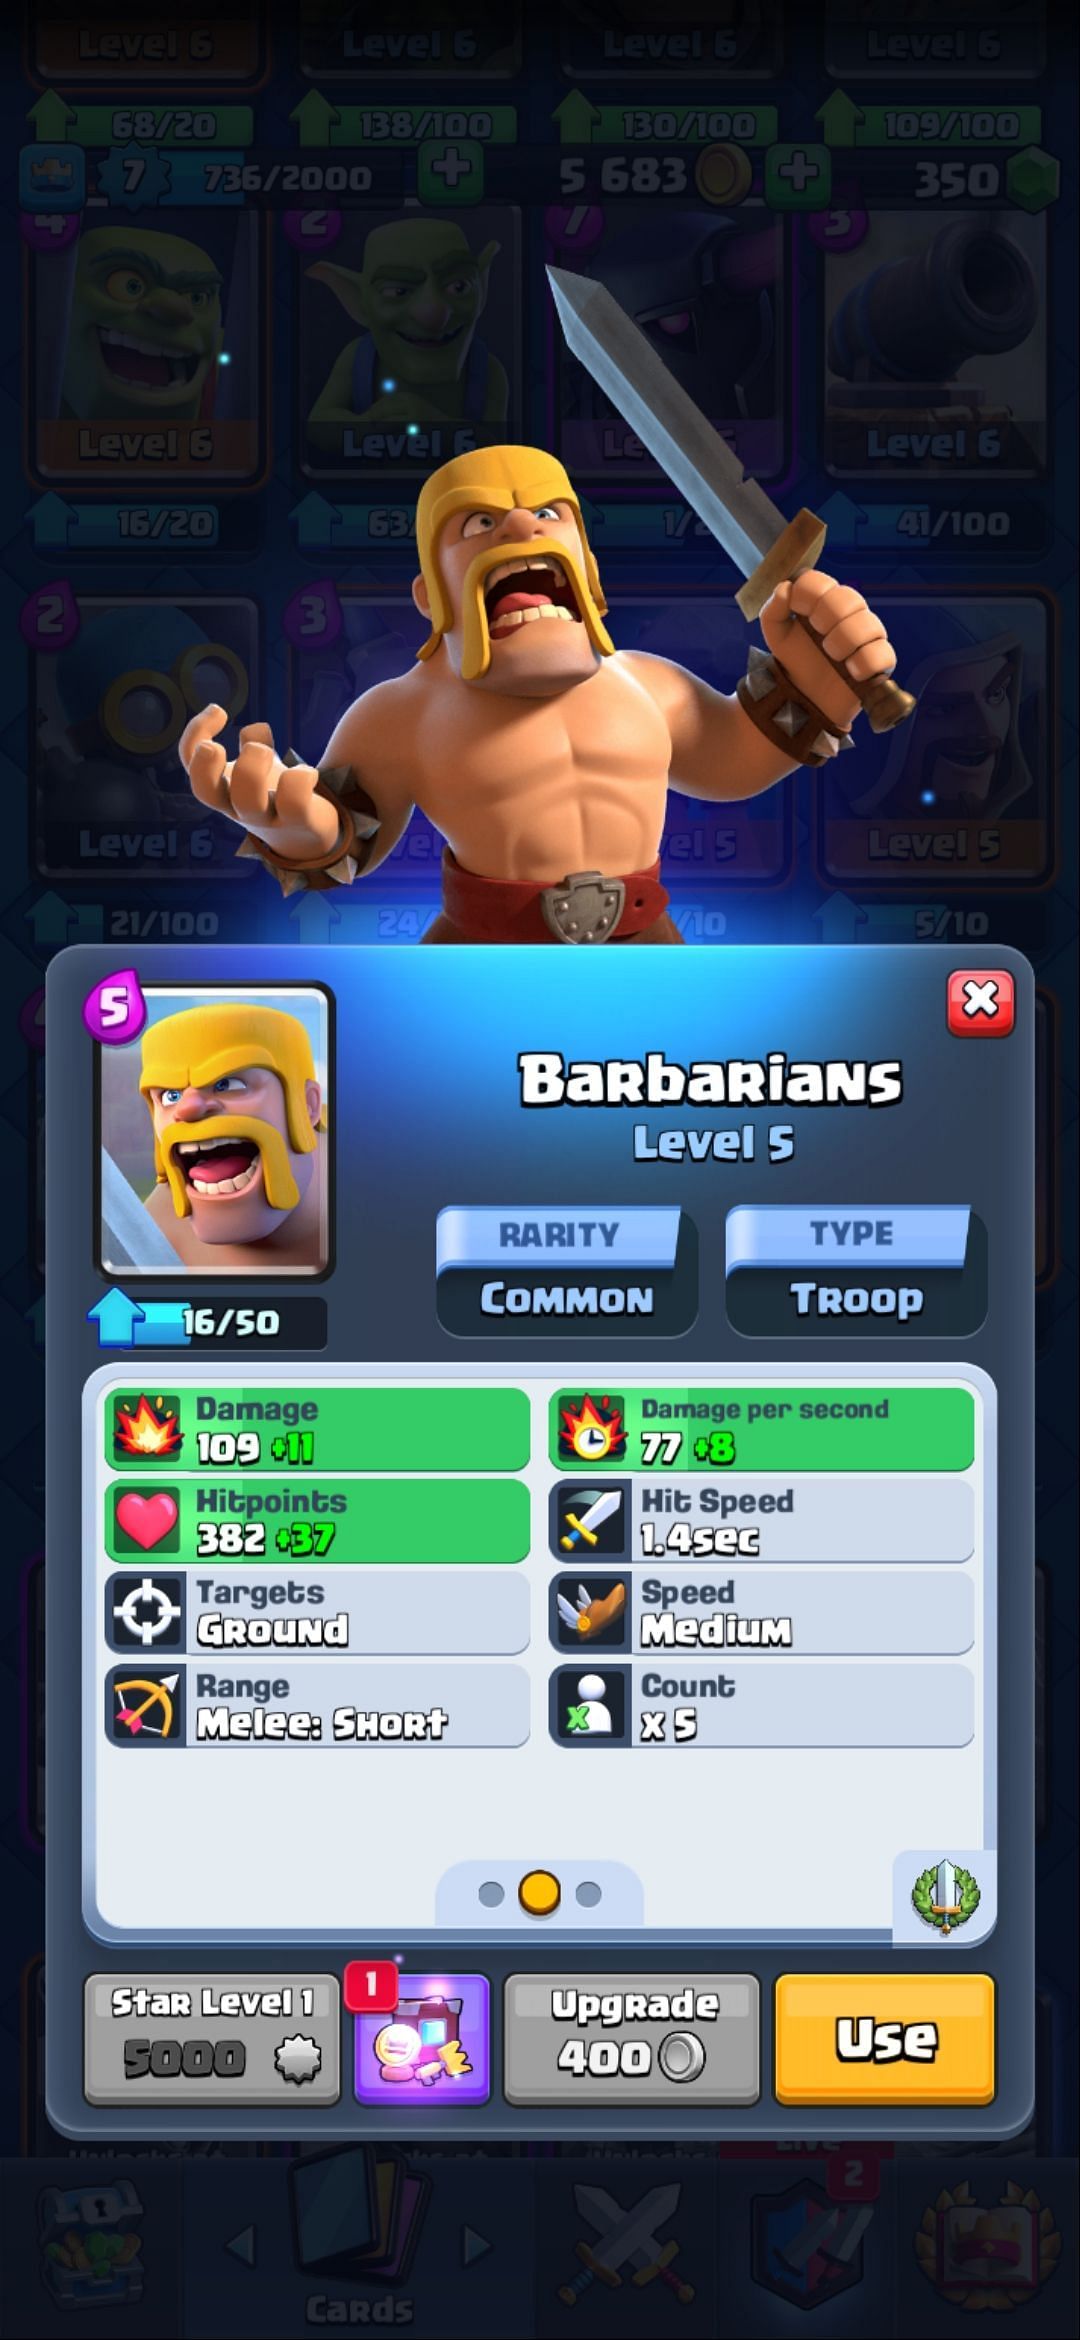 The Barbarians card (Image via Sportskeeda)